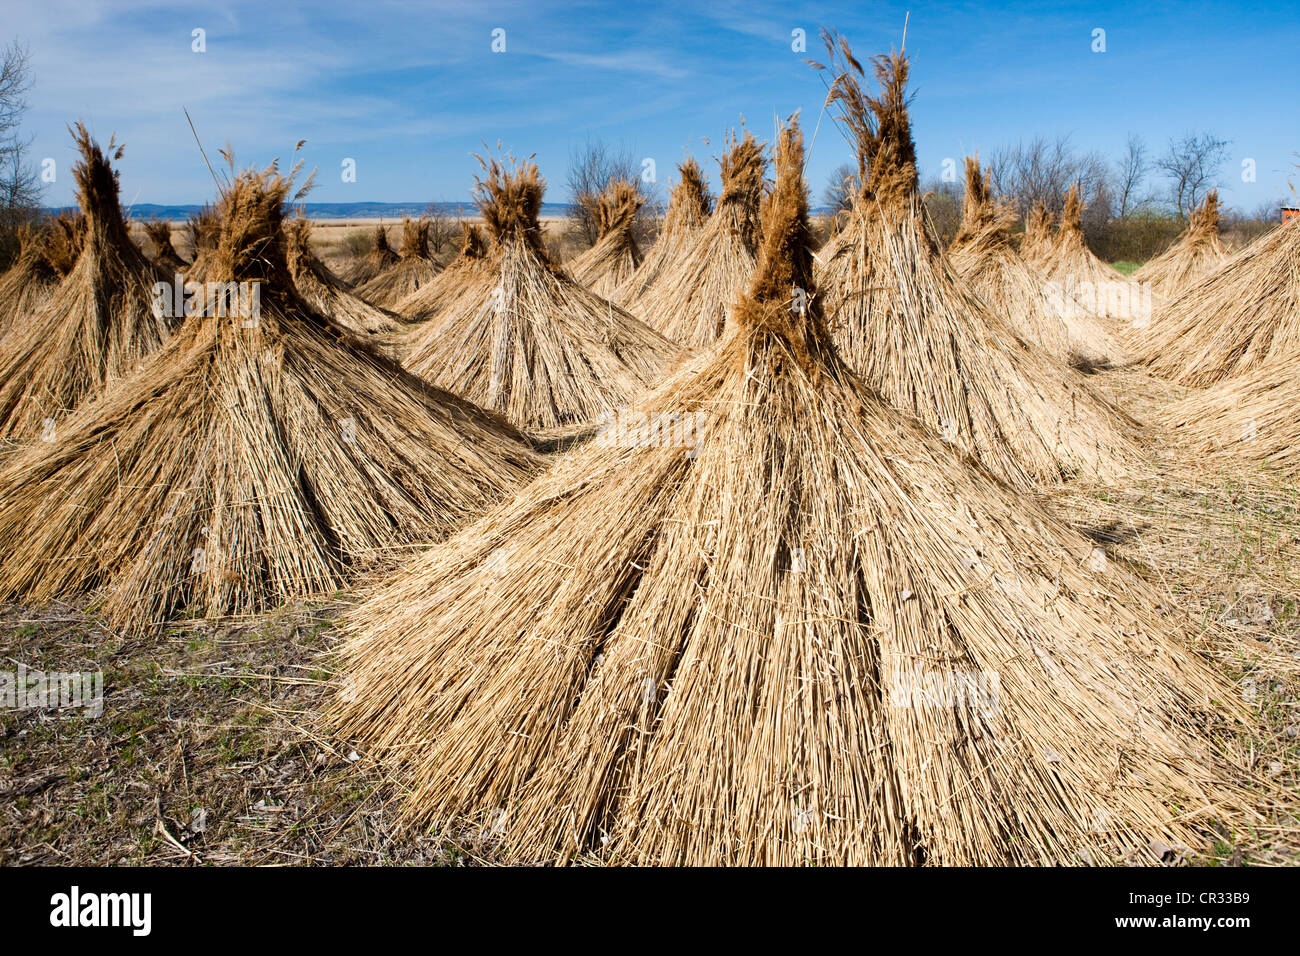 Cones of reed, reeds bundled to dry, Lake Neusiedl National Park, Seewinkel, Burgenland, Austria, Europe Stock Photo